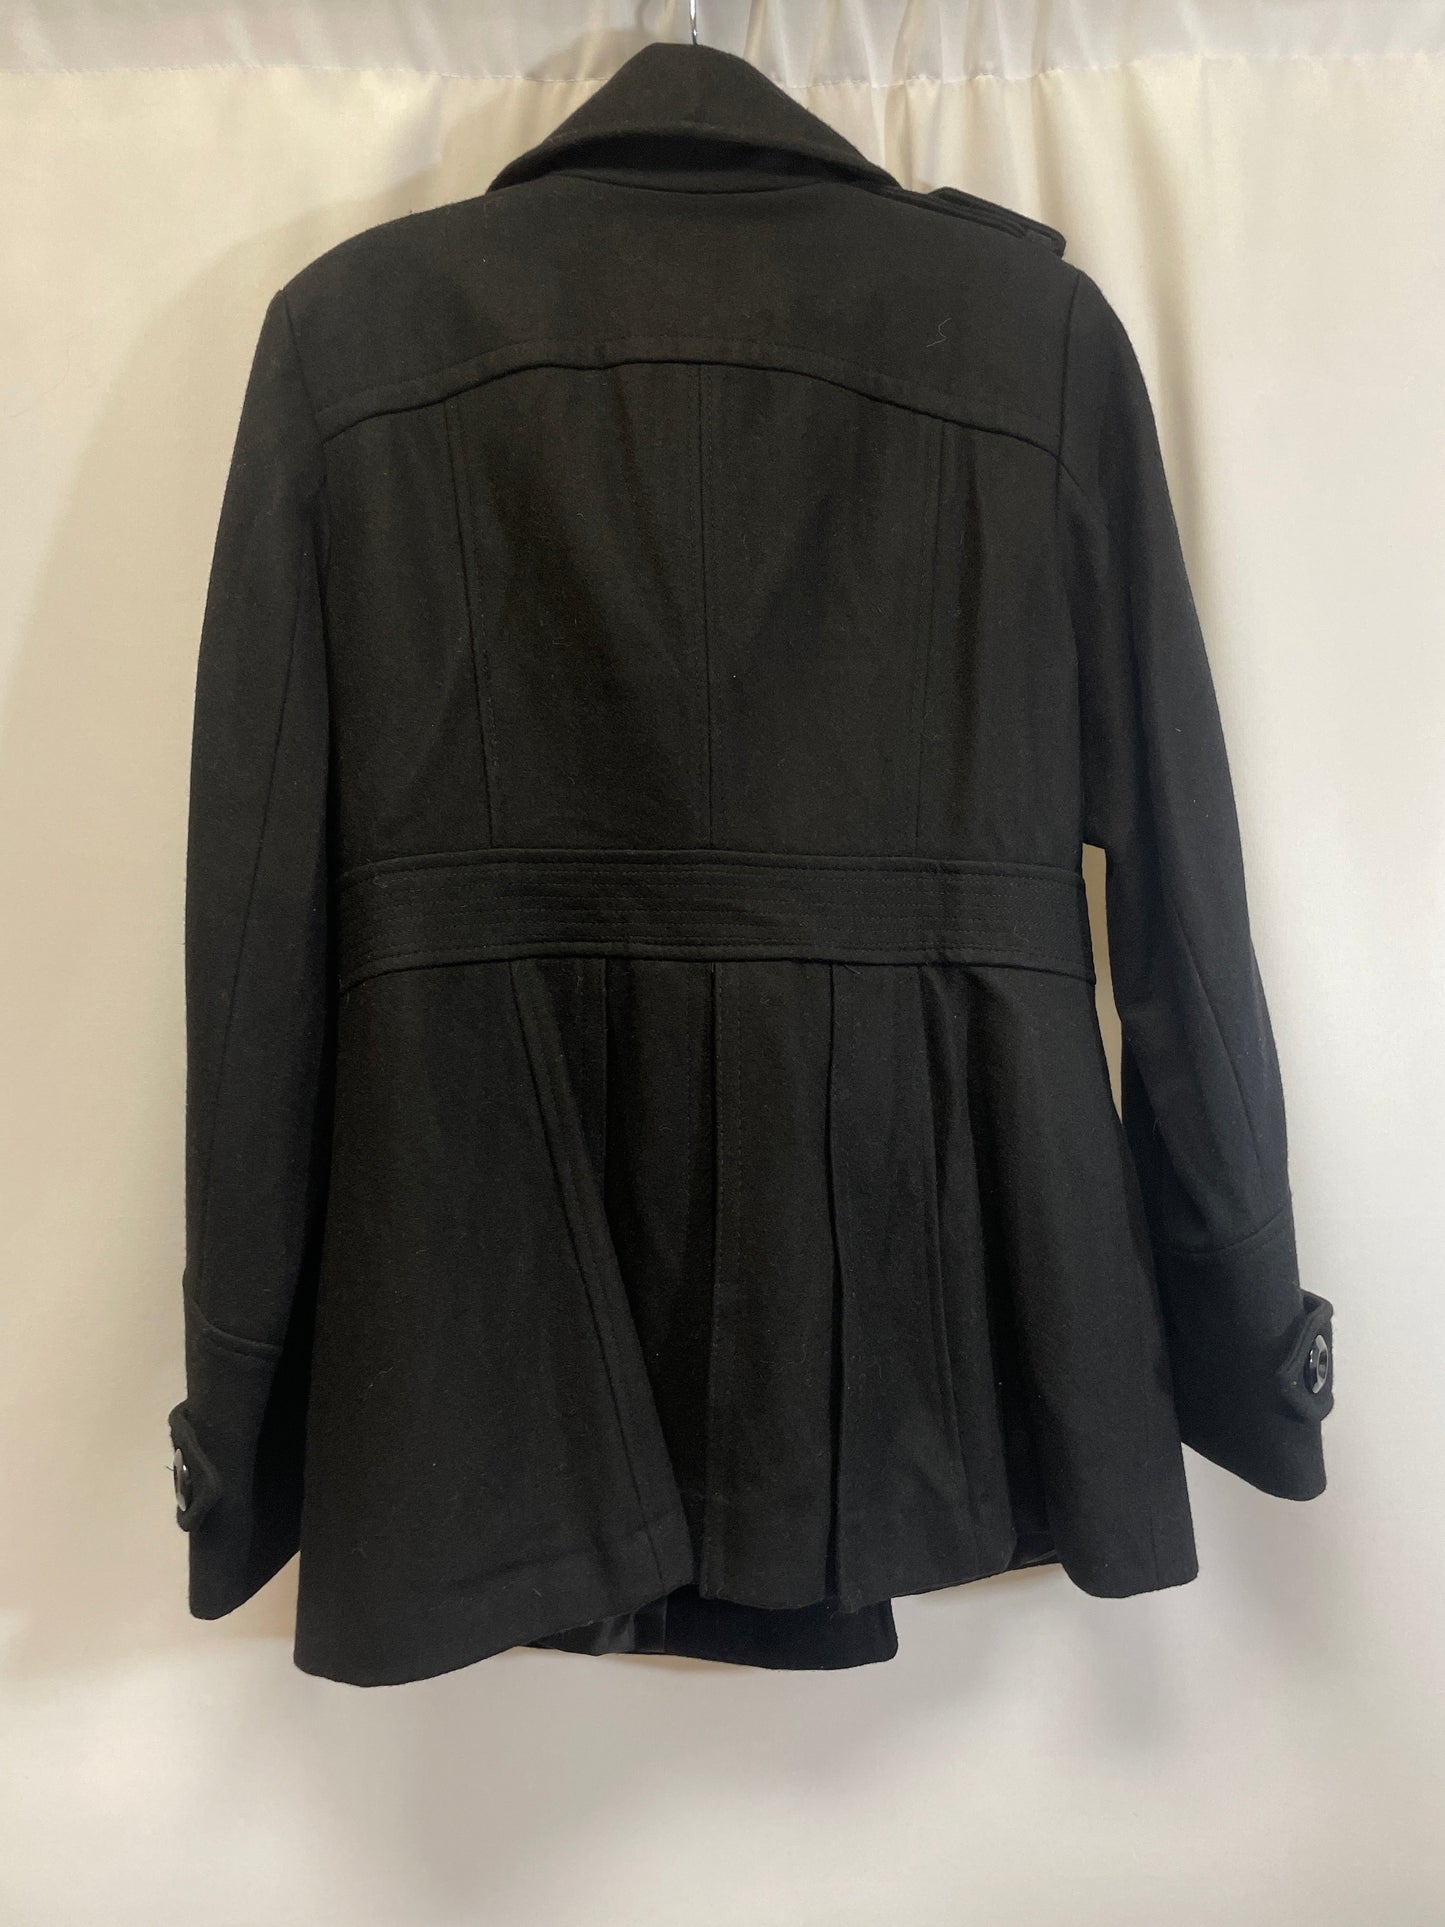 Black Coat Peacoat Apt 9, Size M